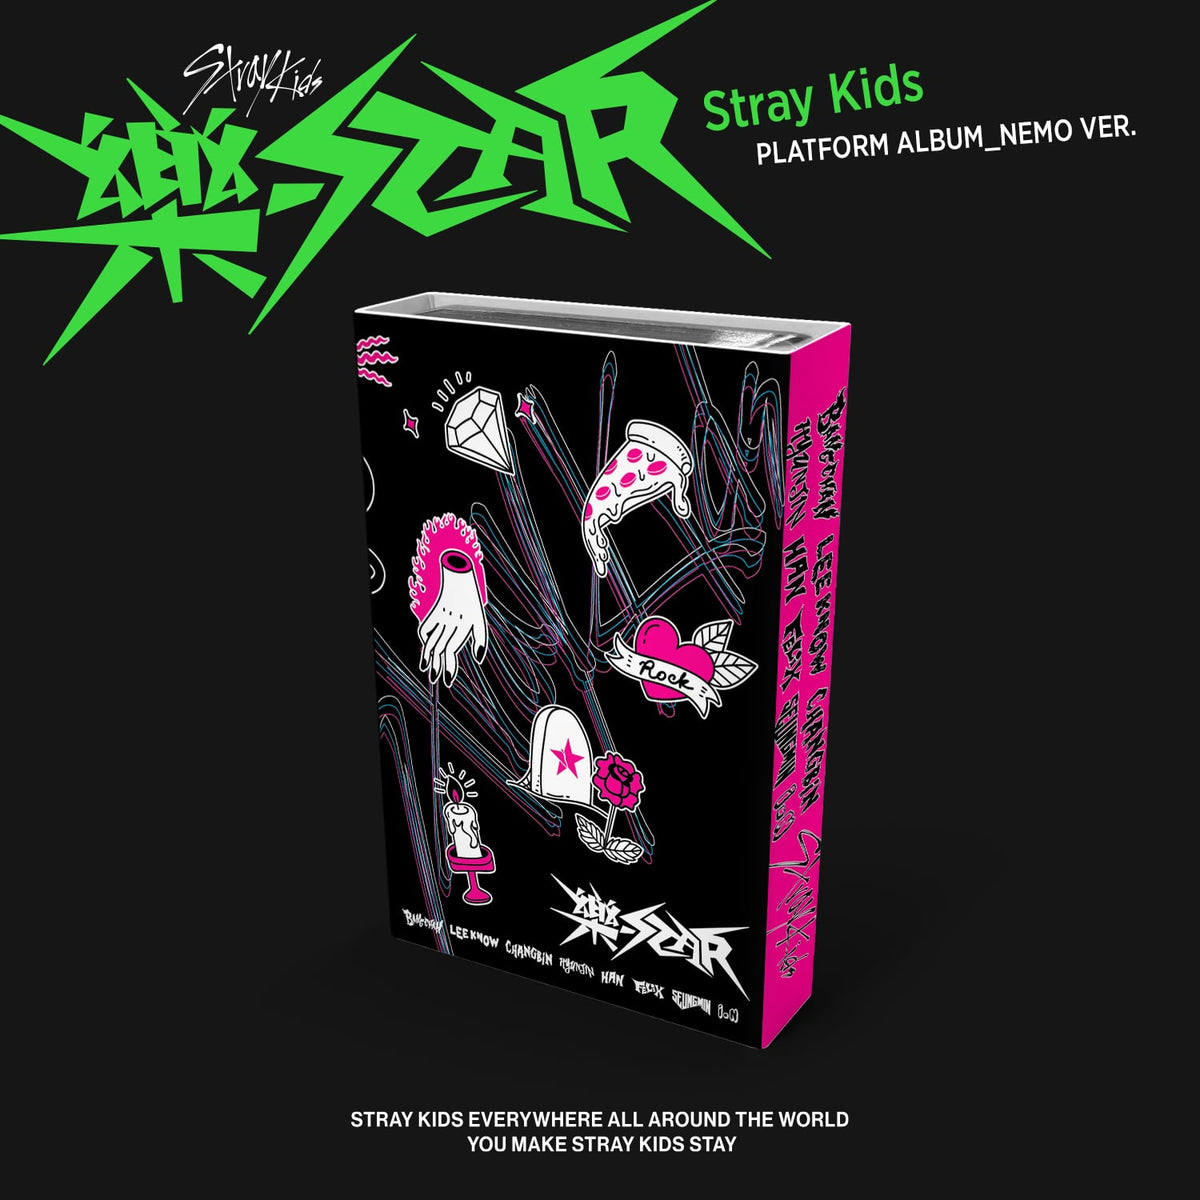 Stray Kids - 樂-STAR (PLATFORM ALBUM - NEMO VER)